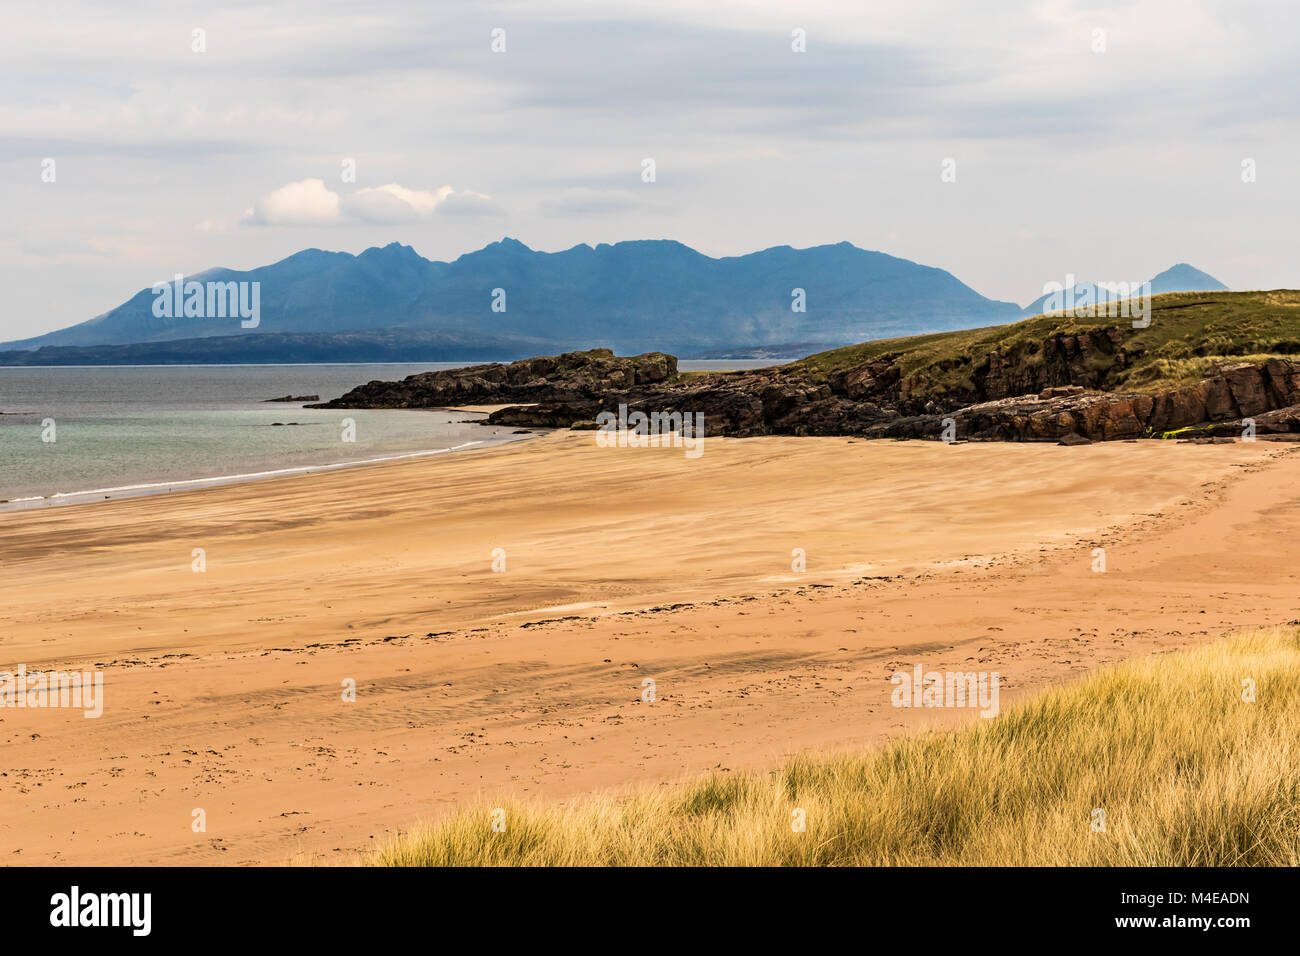 Isle of Skye as seen from a beach on Isle of Rum Stock Photo